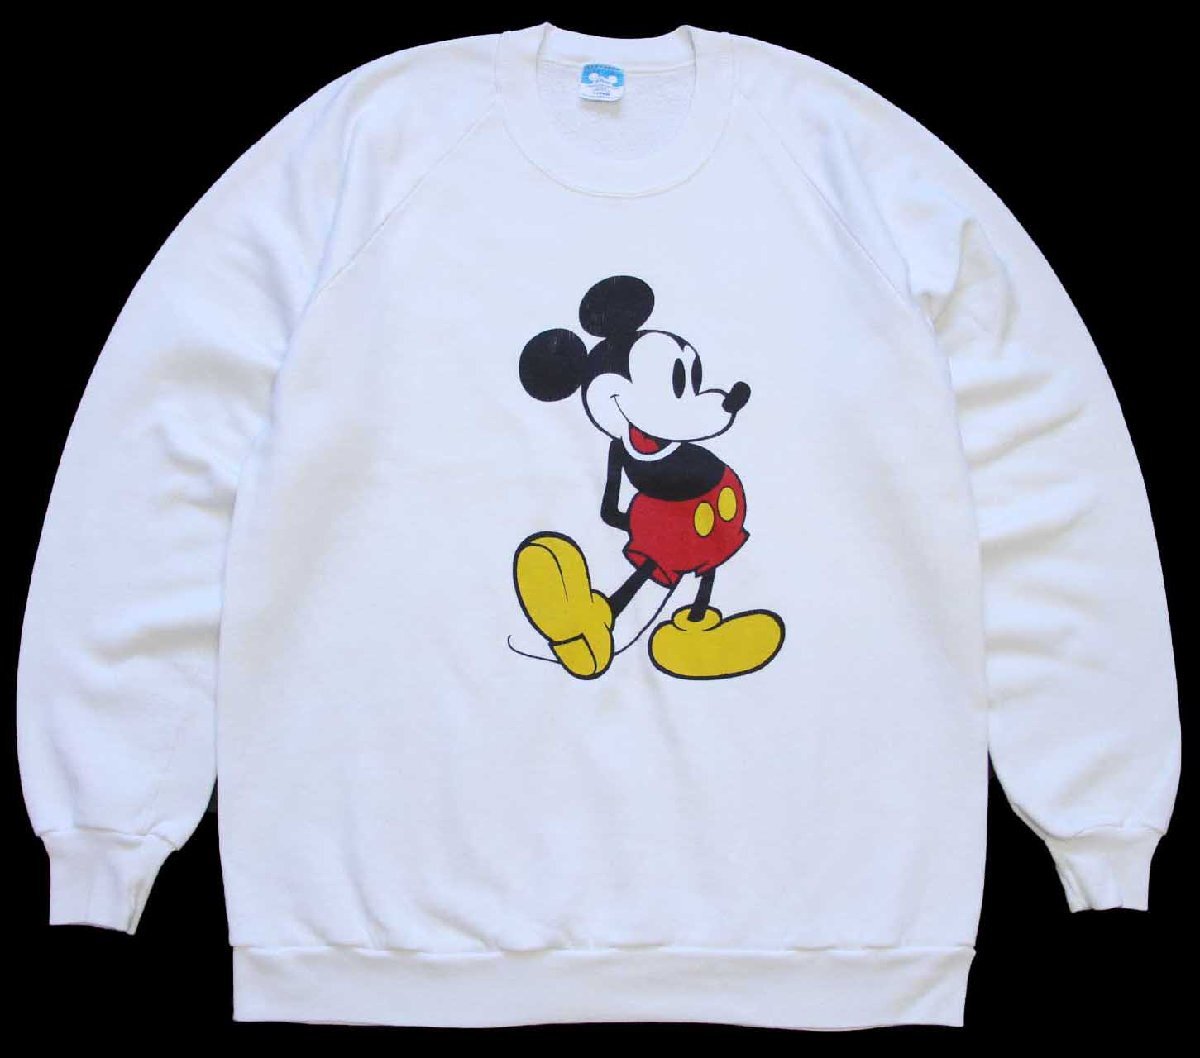 80s USA製 Disneyディズニー ミッキー マウス スウェット 白 XL 